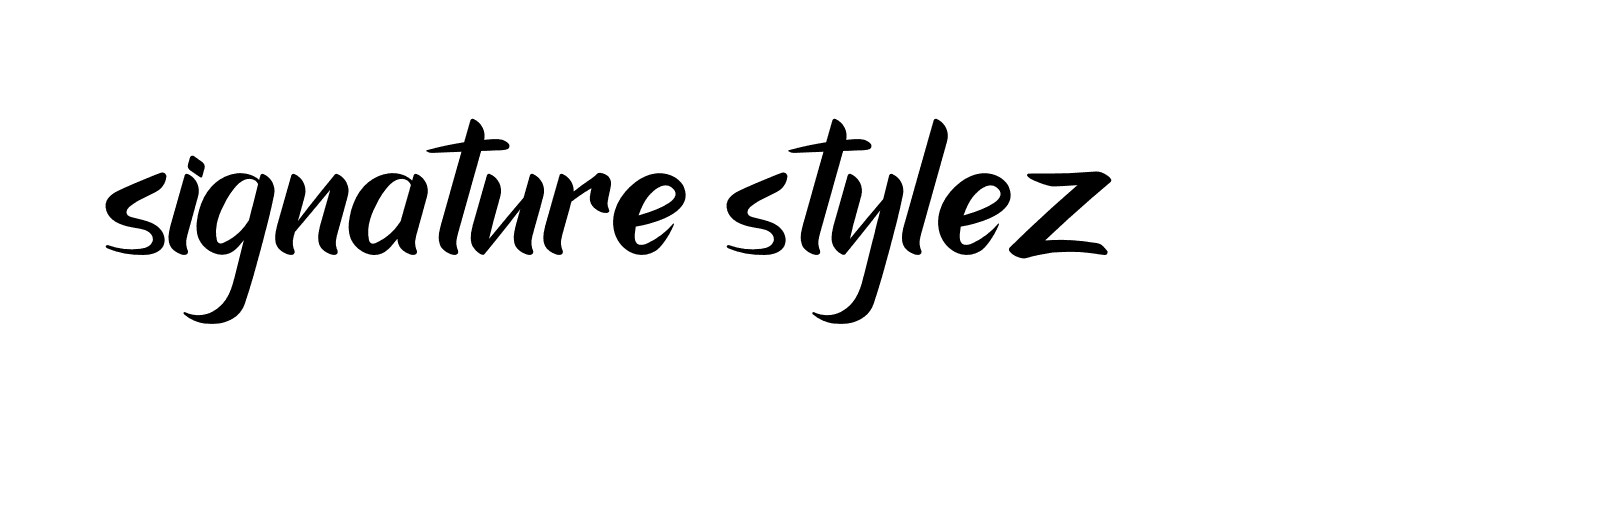 88+ Signature-stylez Name Signature Style Ideas | Good Digital Signature